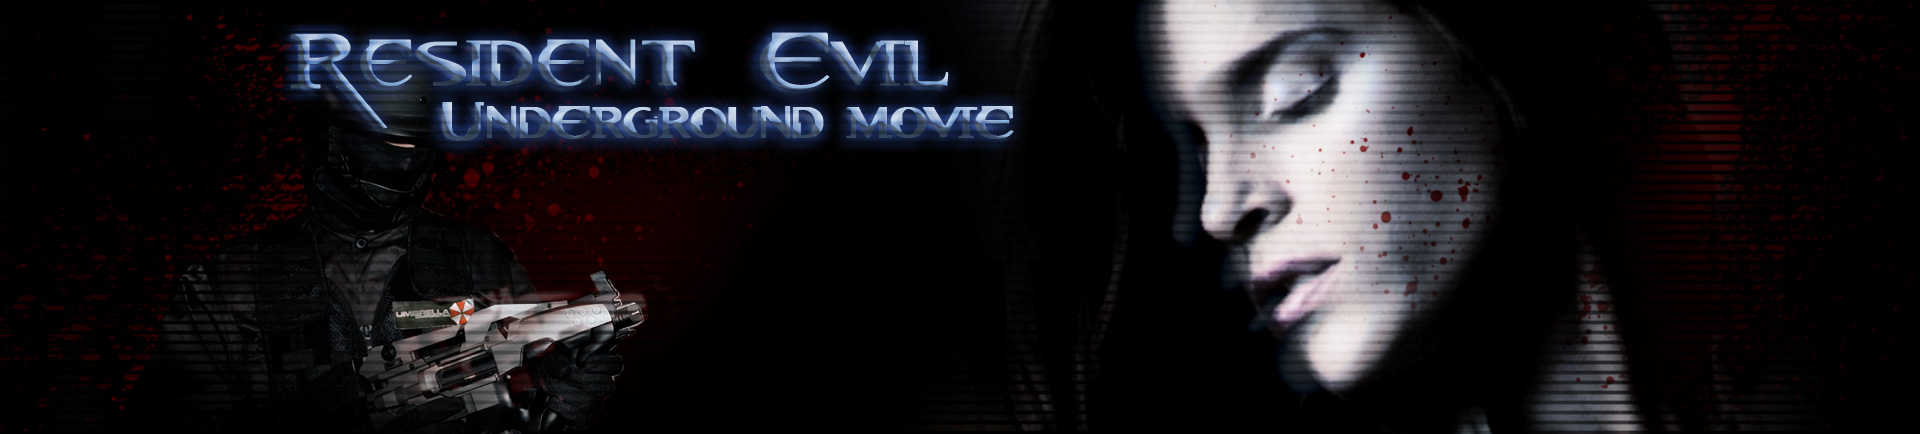 Resident Evil Project Eva fanmovie